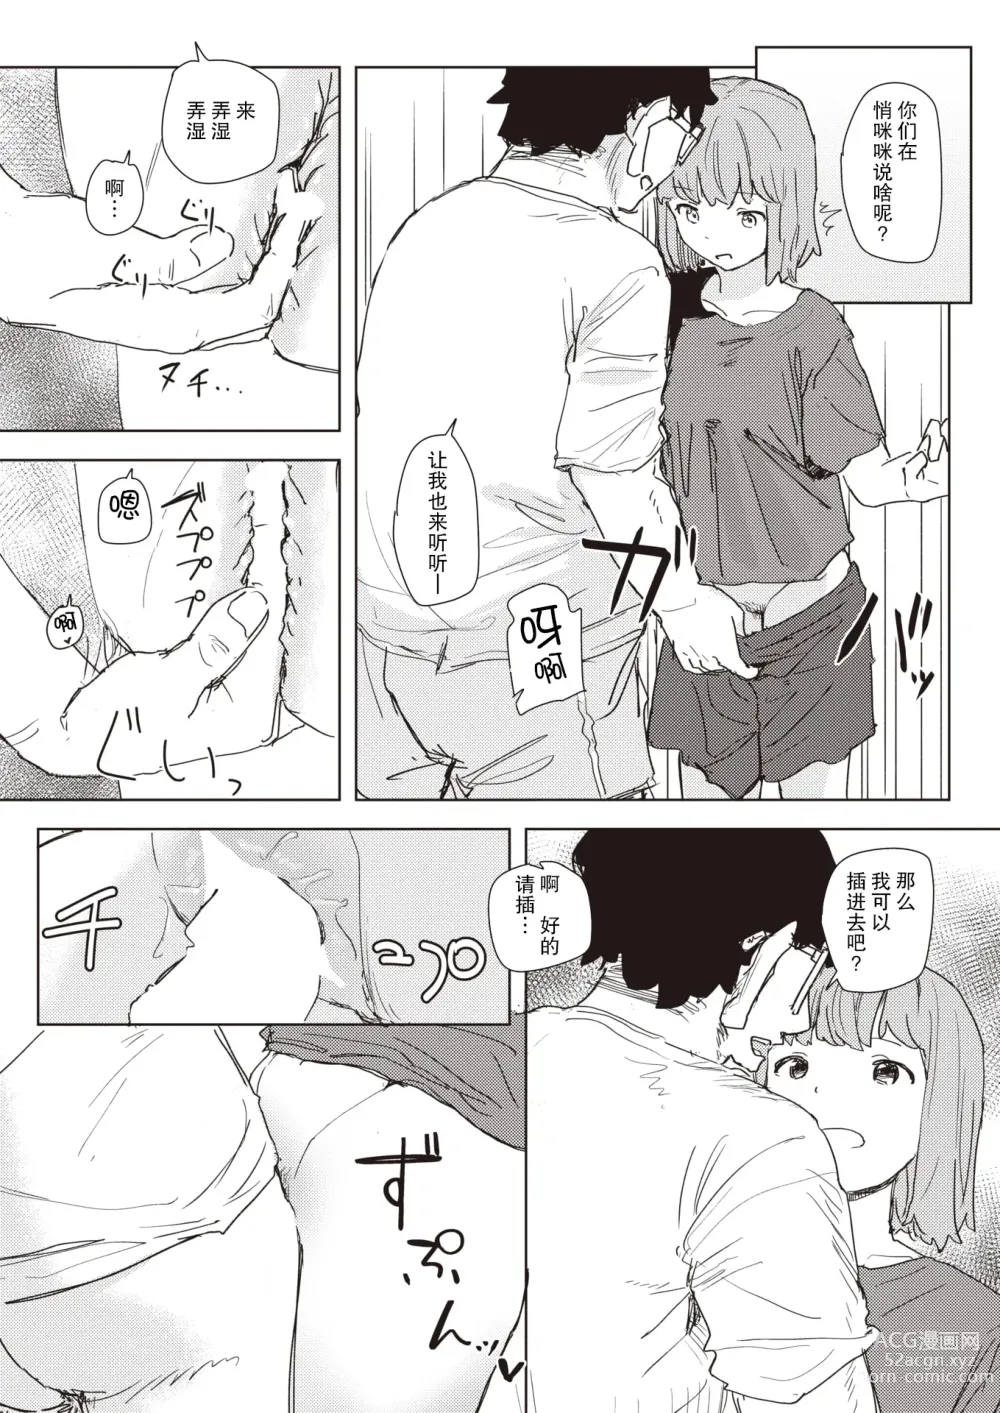 Page 12 of manga Unhappy Birthday